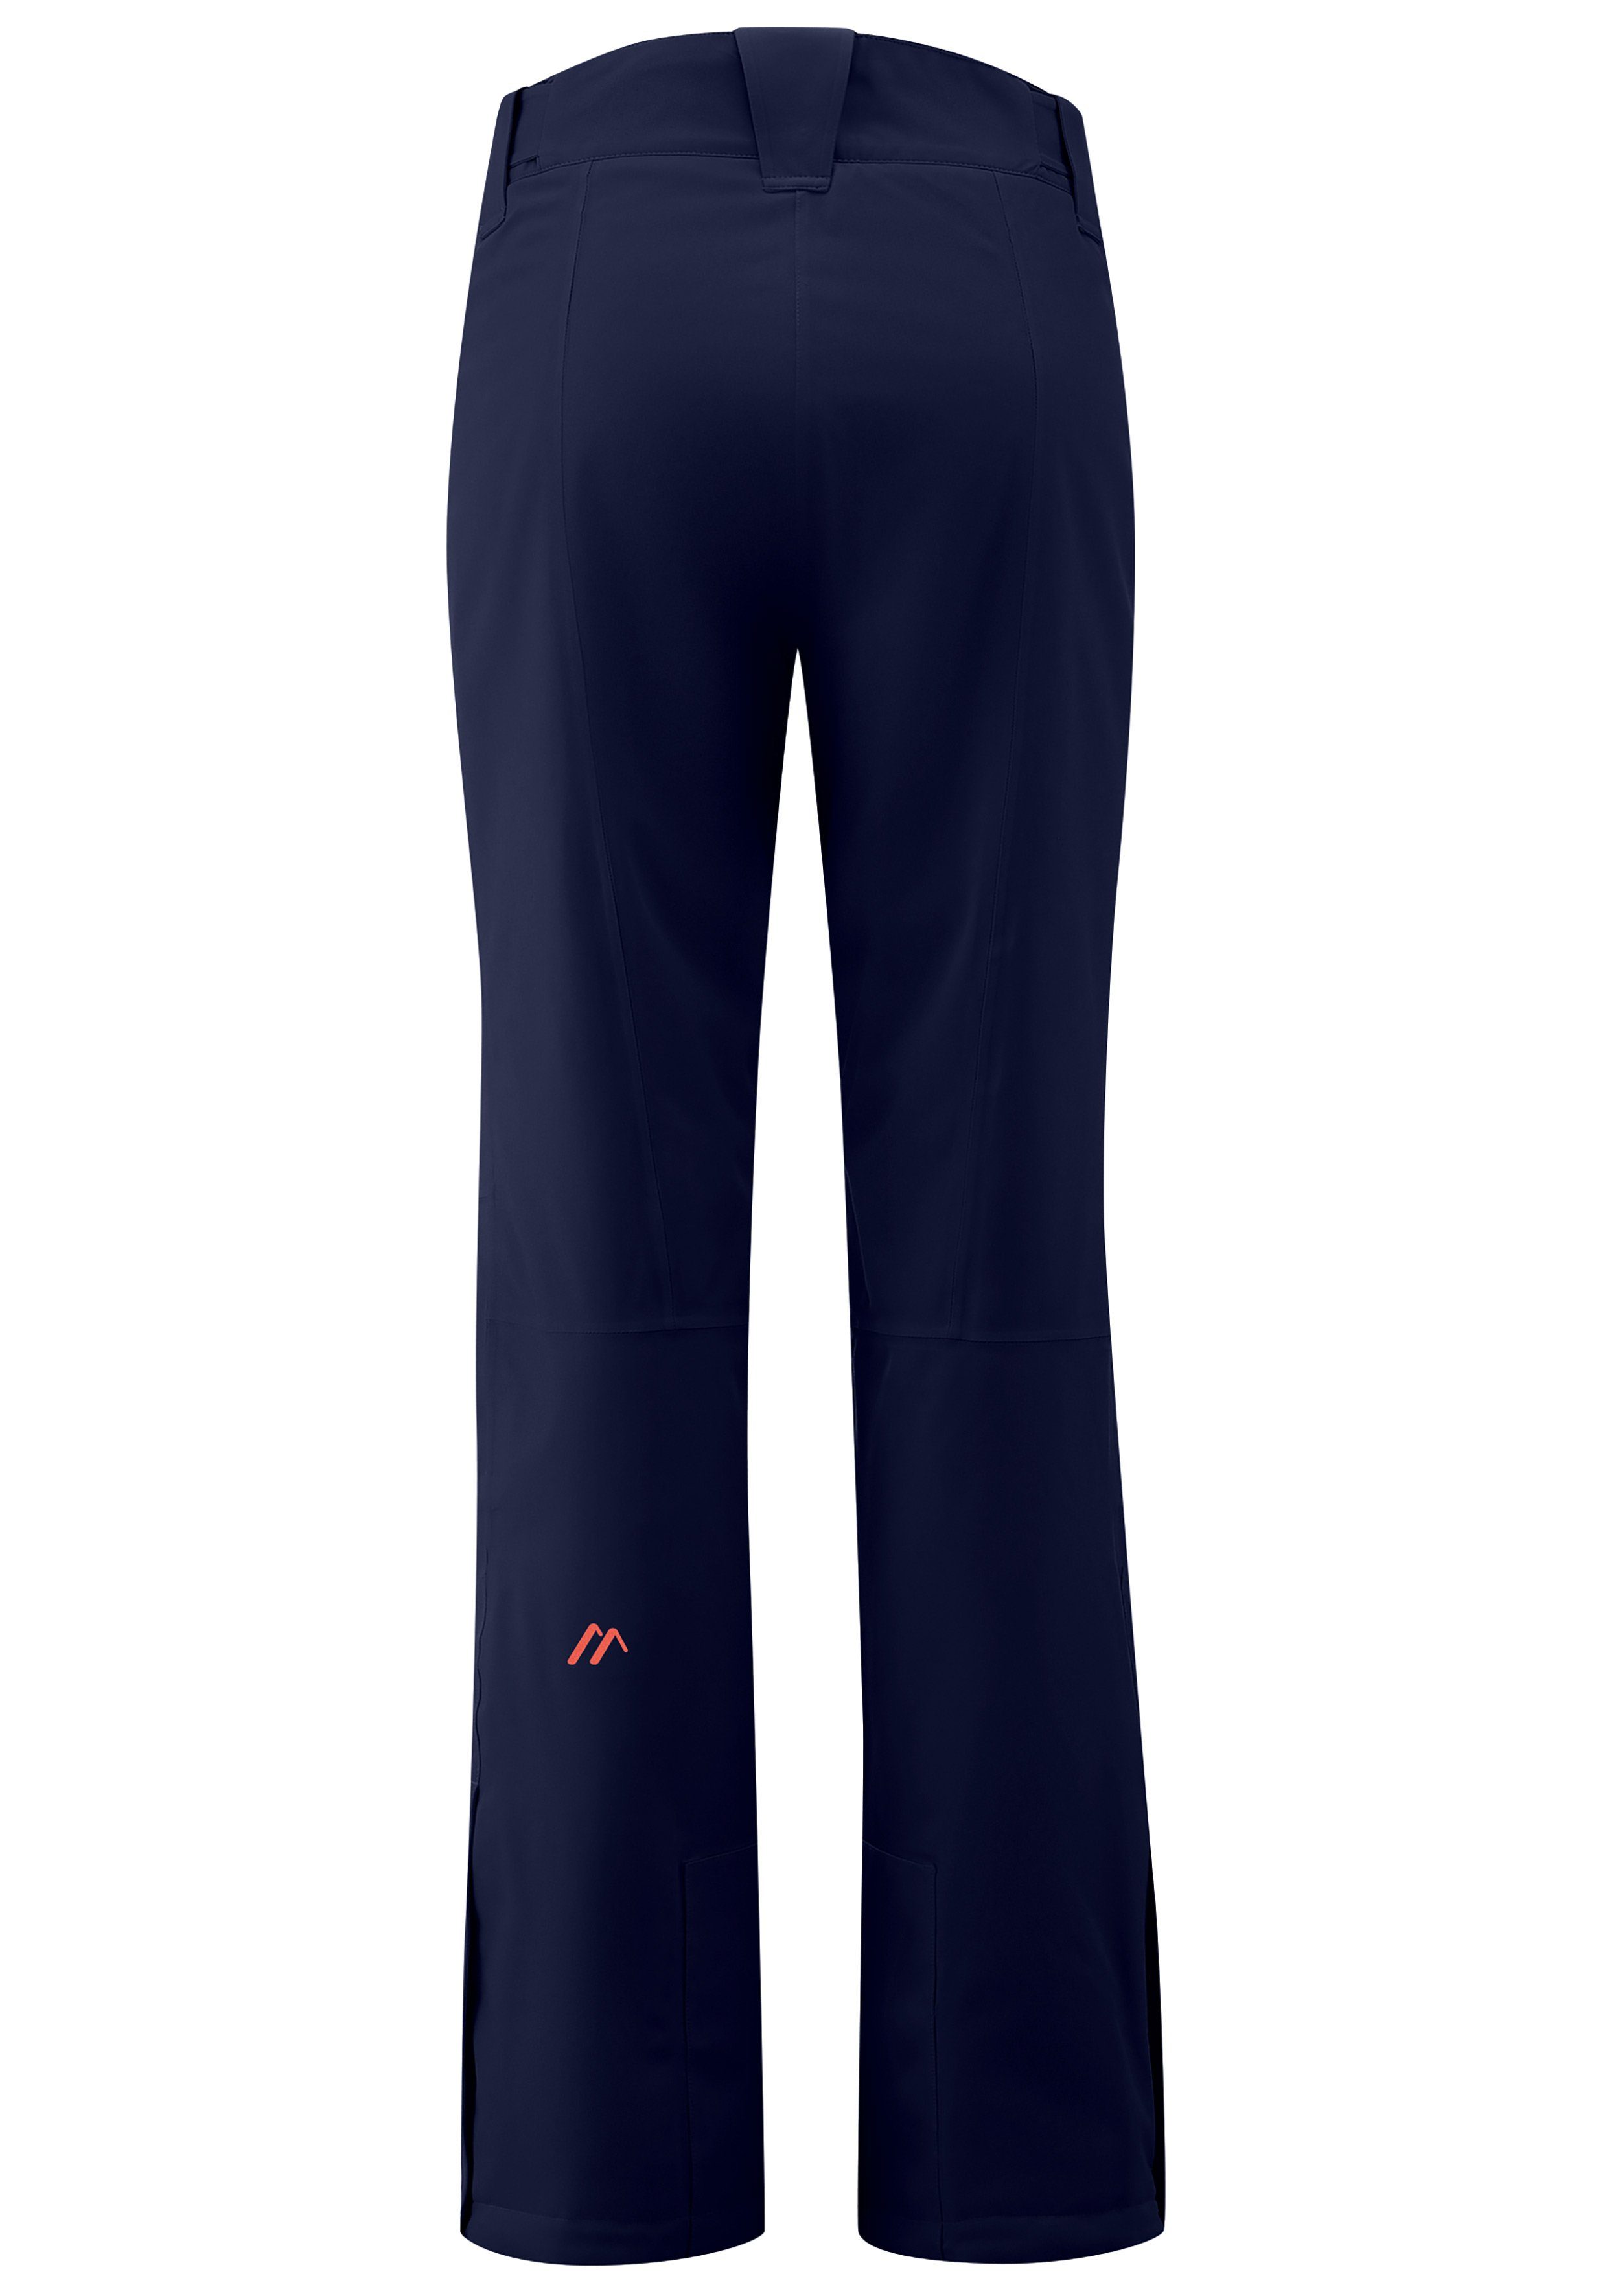 Maier Sports Skihose dunkelblau Pants sportliche Coral schlanker Skihose Silhouette Feminin, in